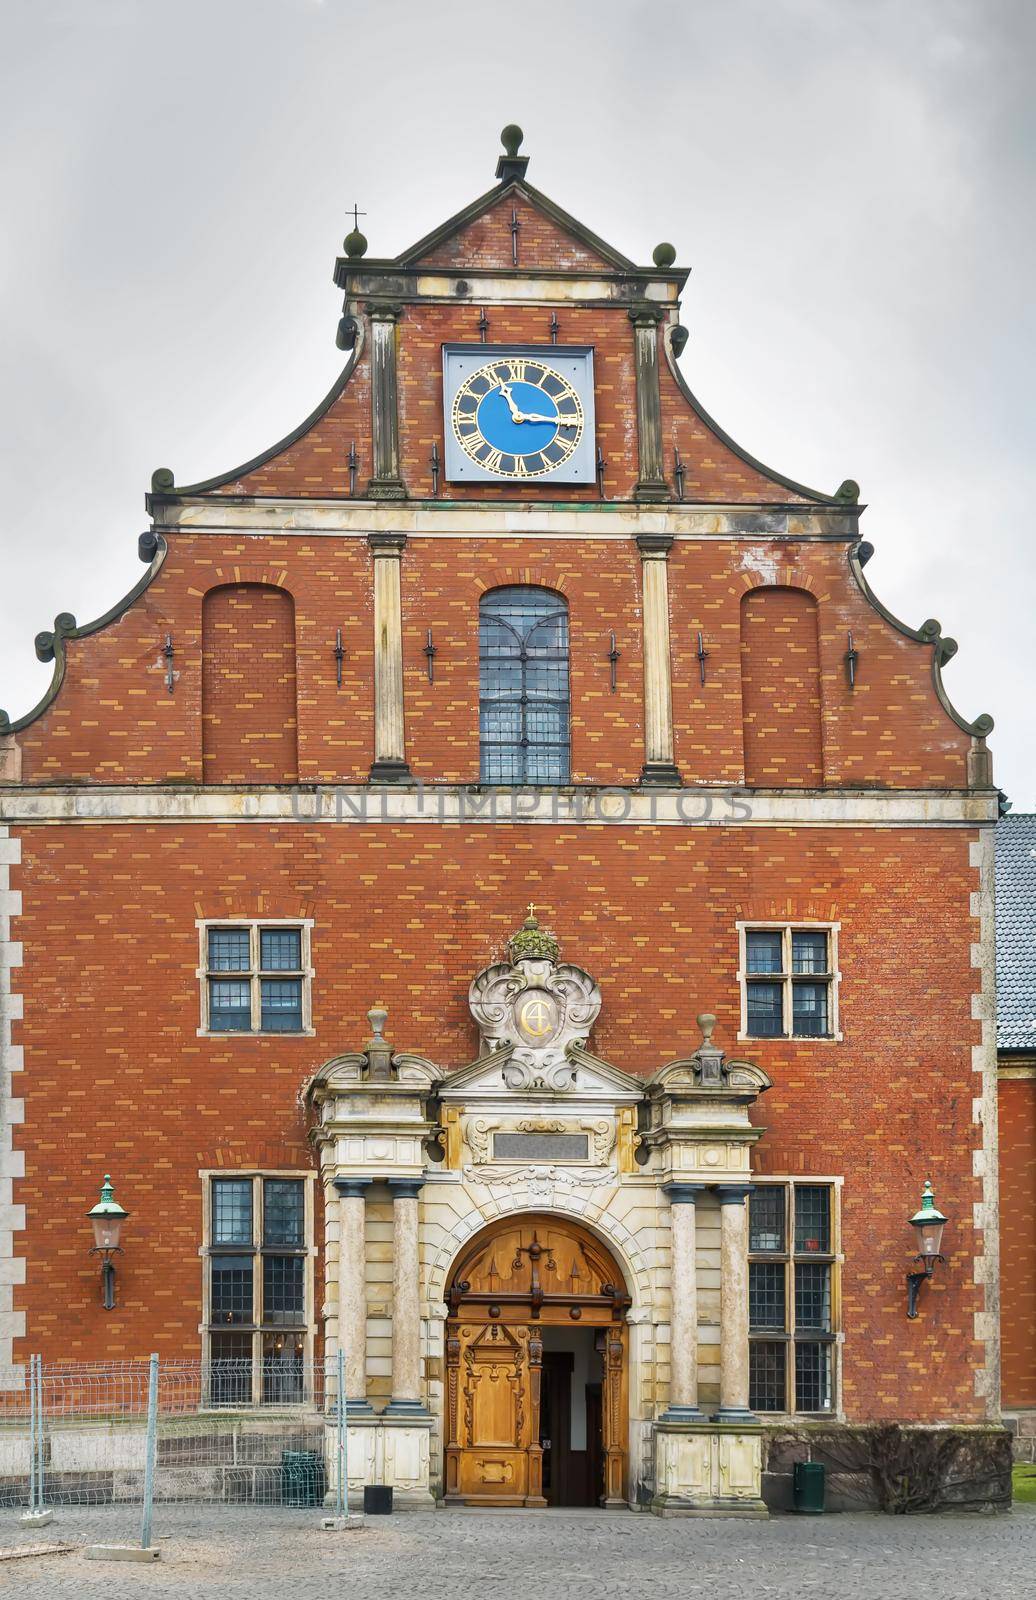 Holmen Church is a Parish church in central Copenhagen in Denmark. Facade